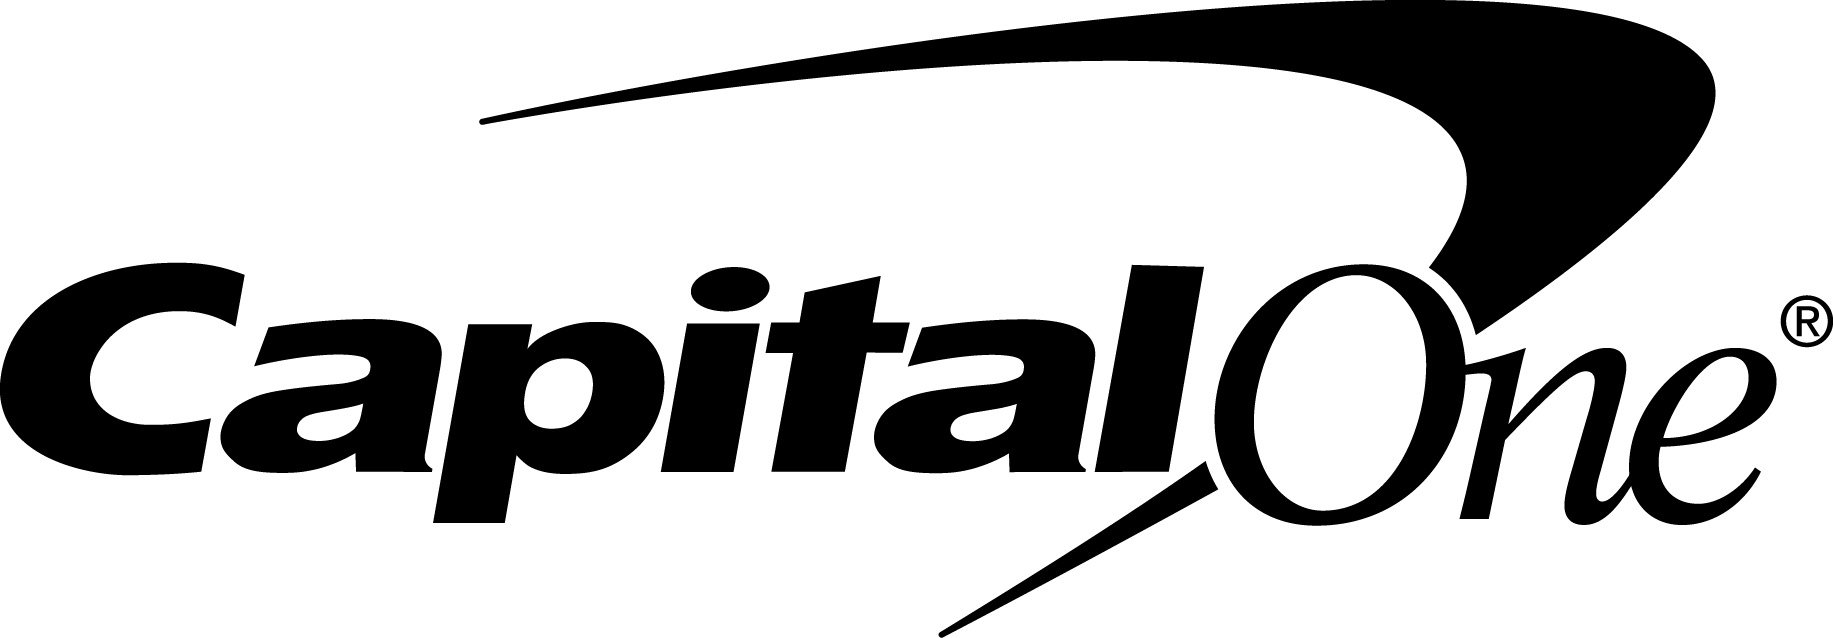 capitalone logo